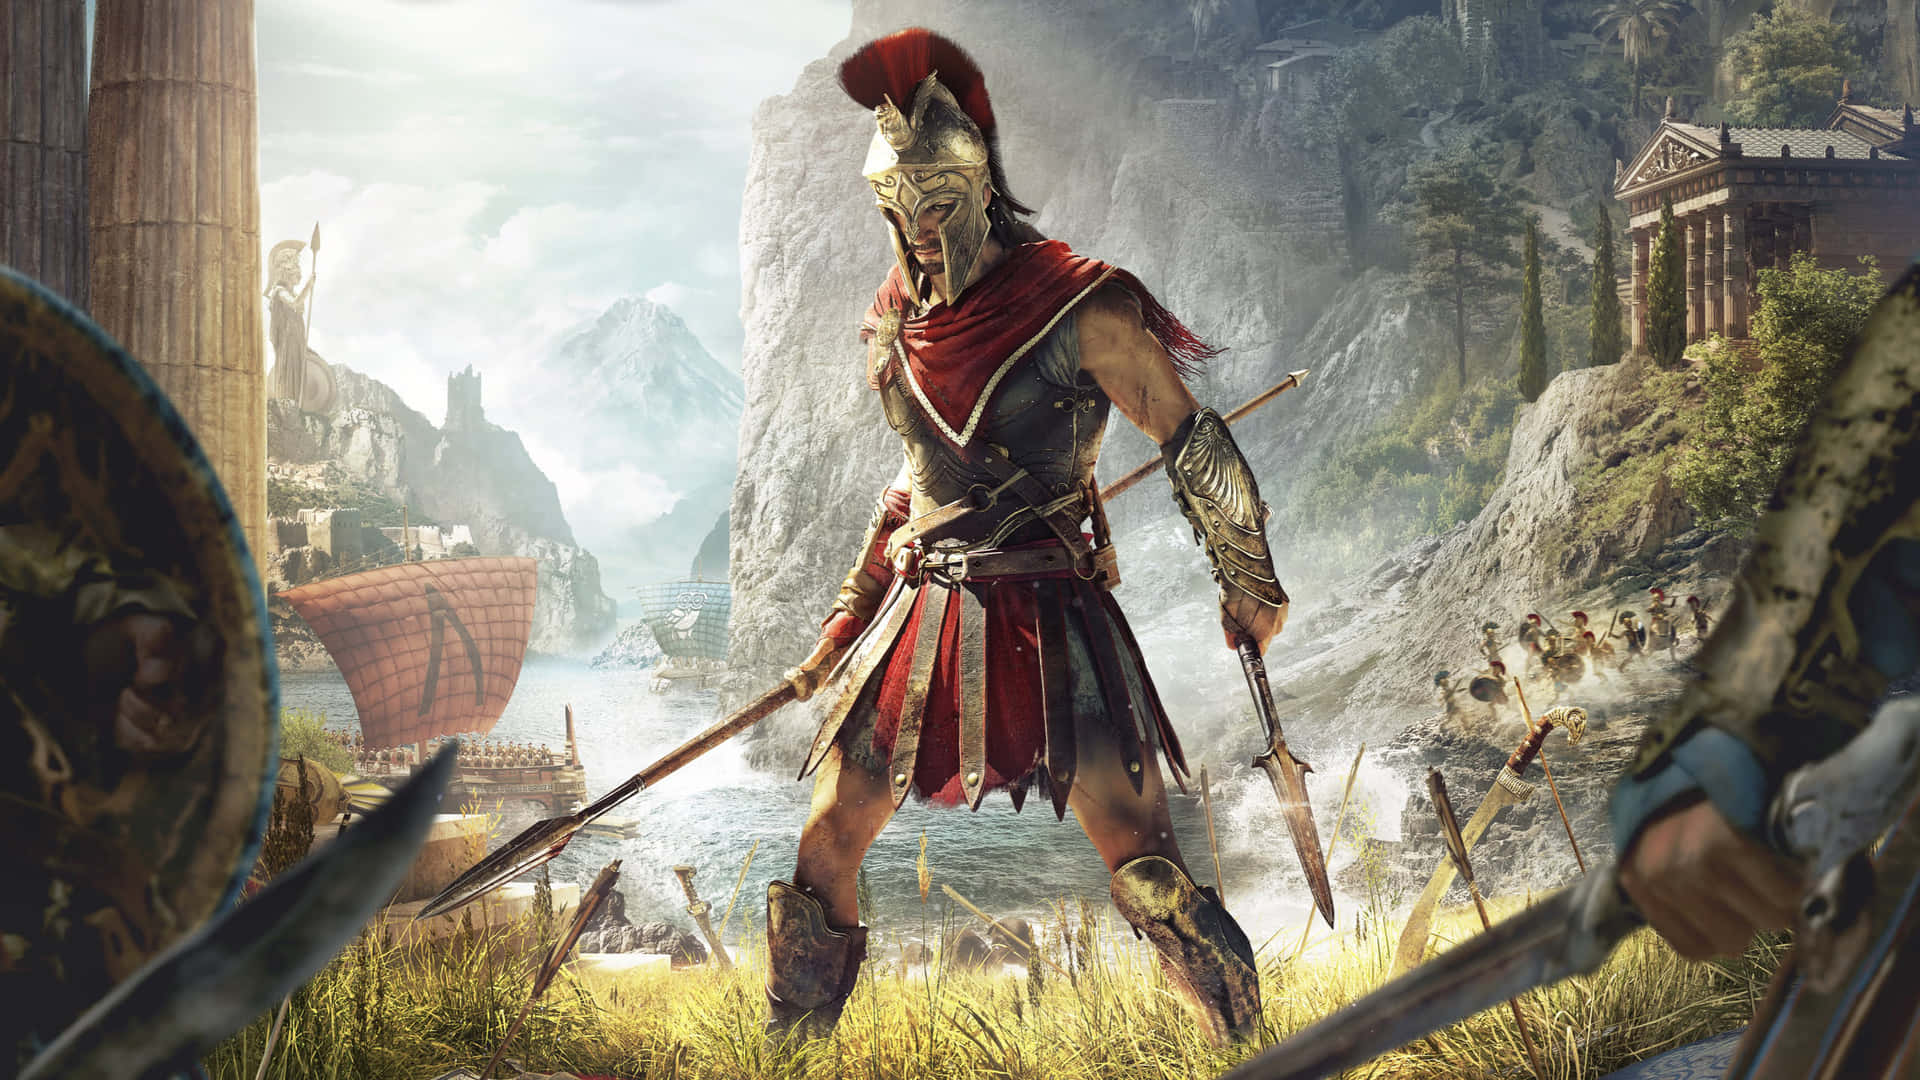 Alexiosspartan Rustning 1440p Assassin's Creed Odyssey Bakgrund